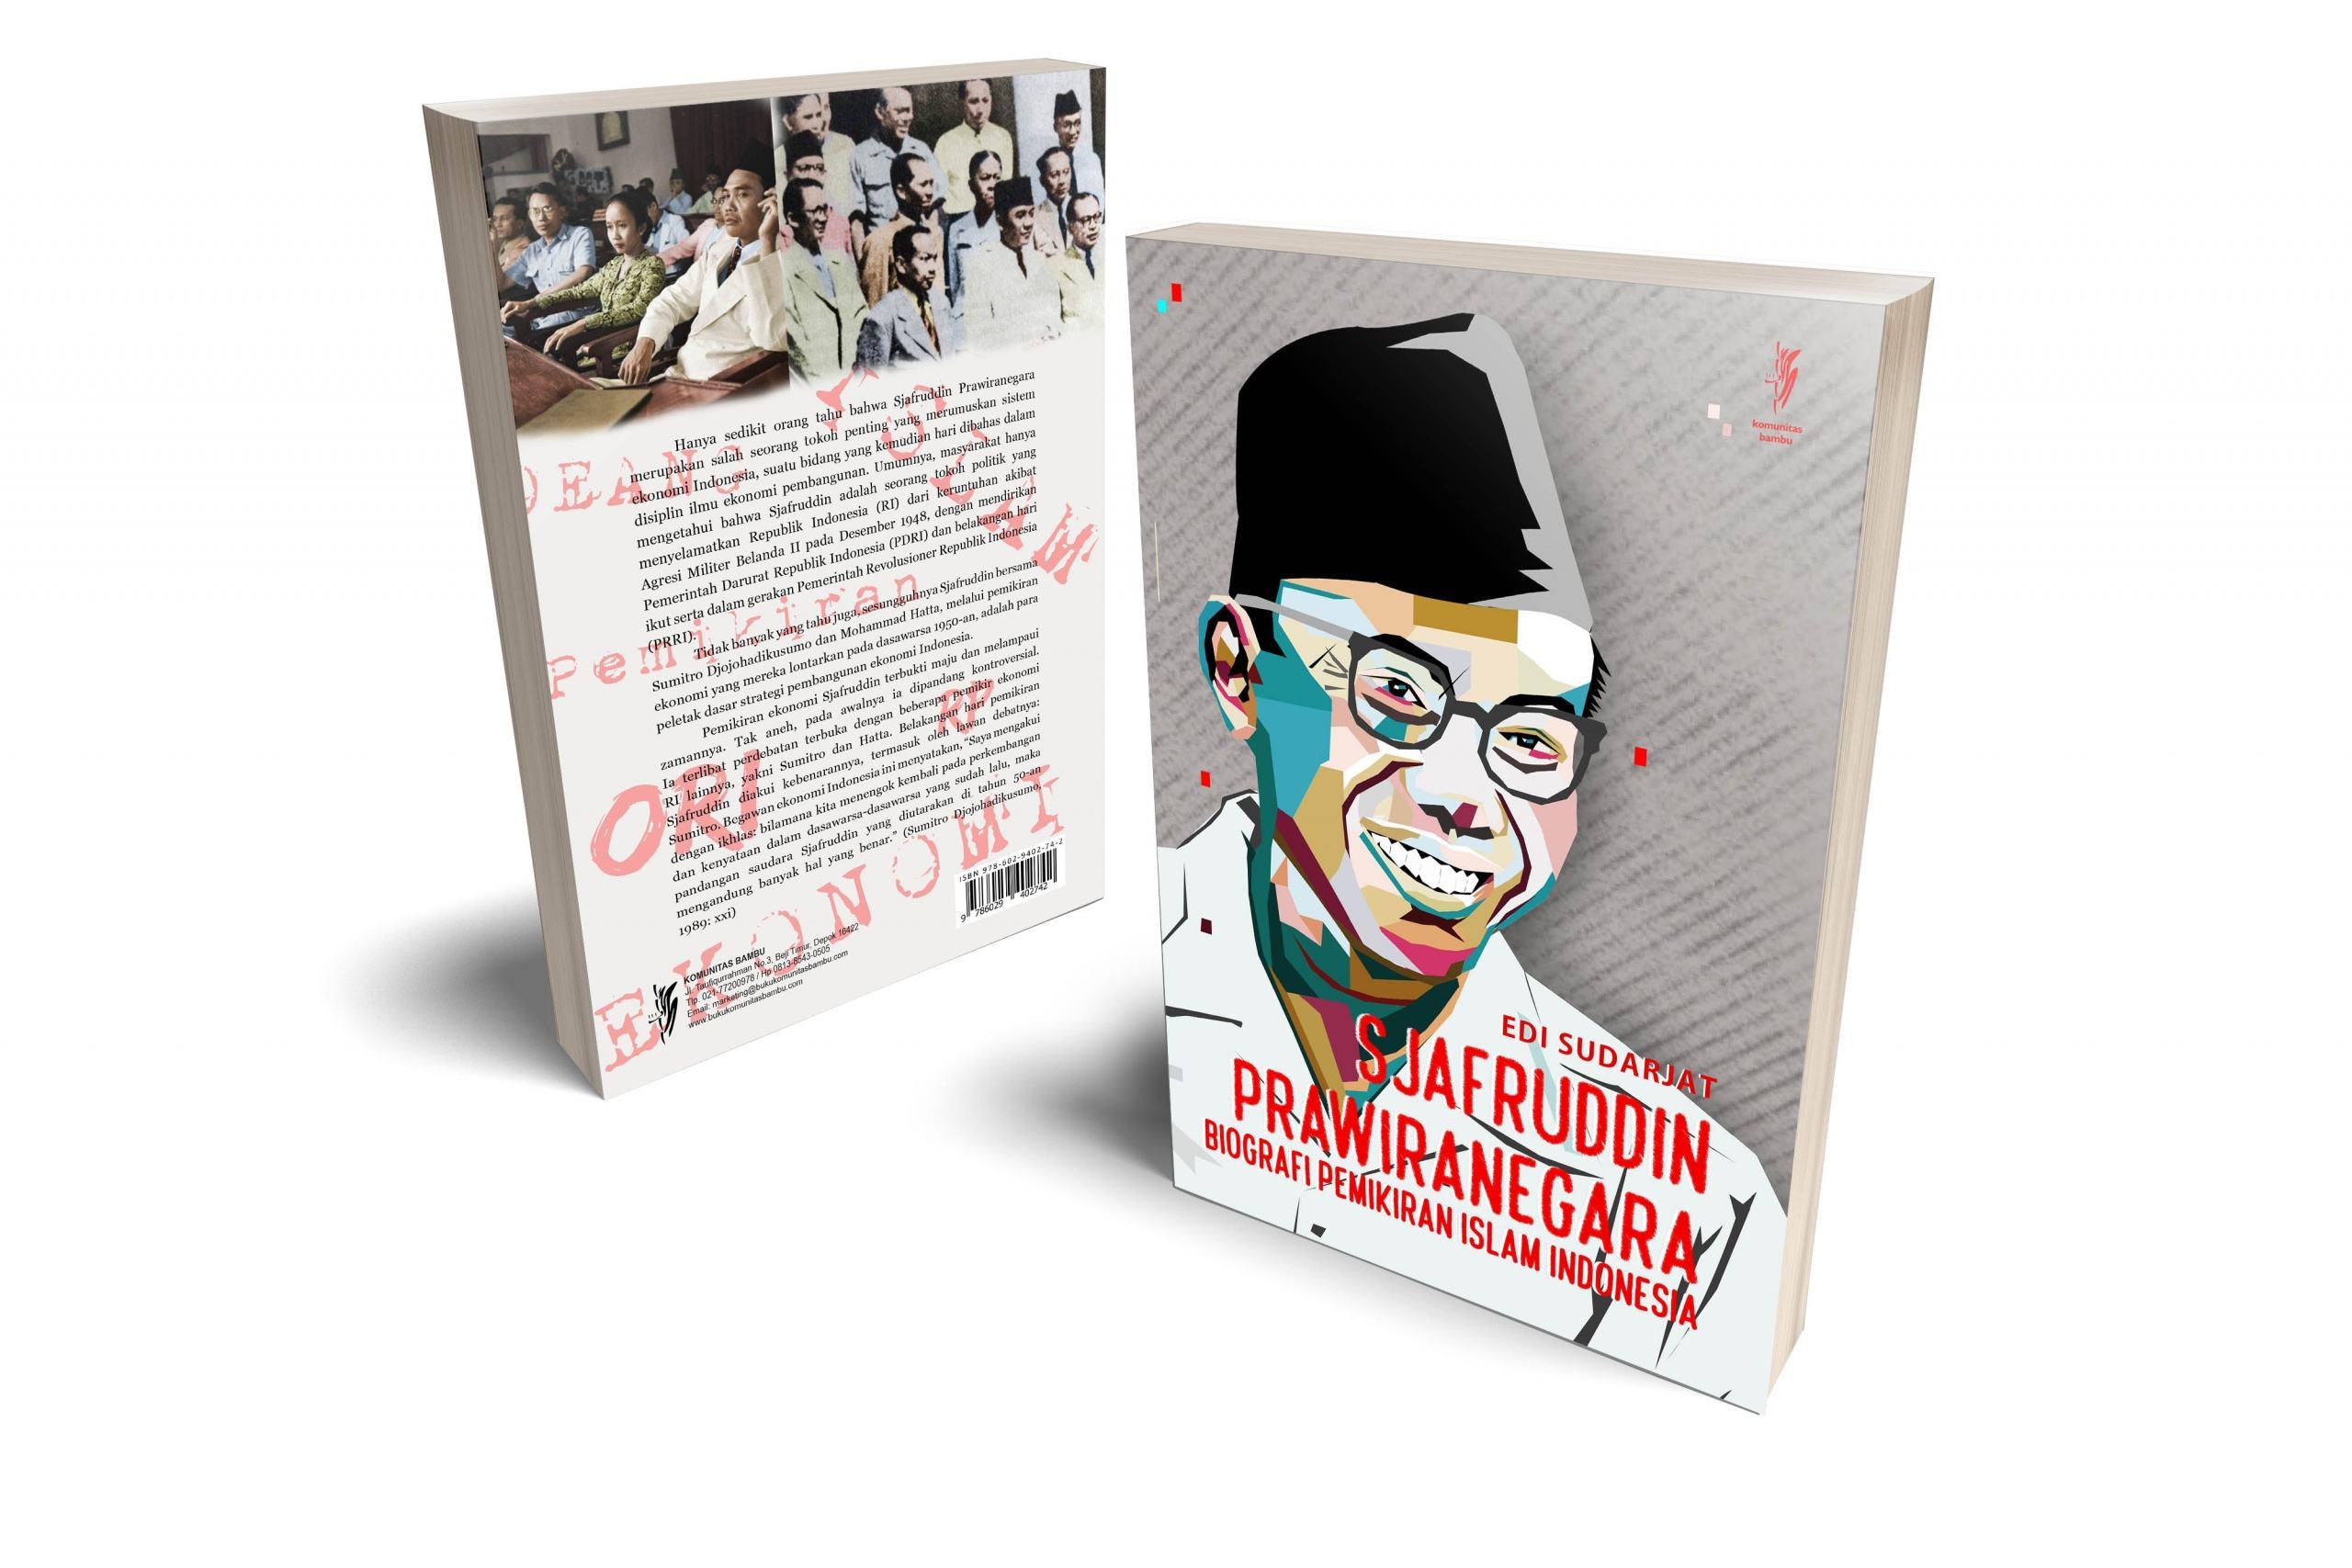 Sjafruddin Prawiranegara: Biografi Pemikiran Ekonomi Islam Indonesia